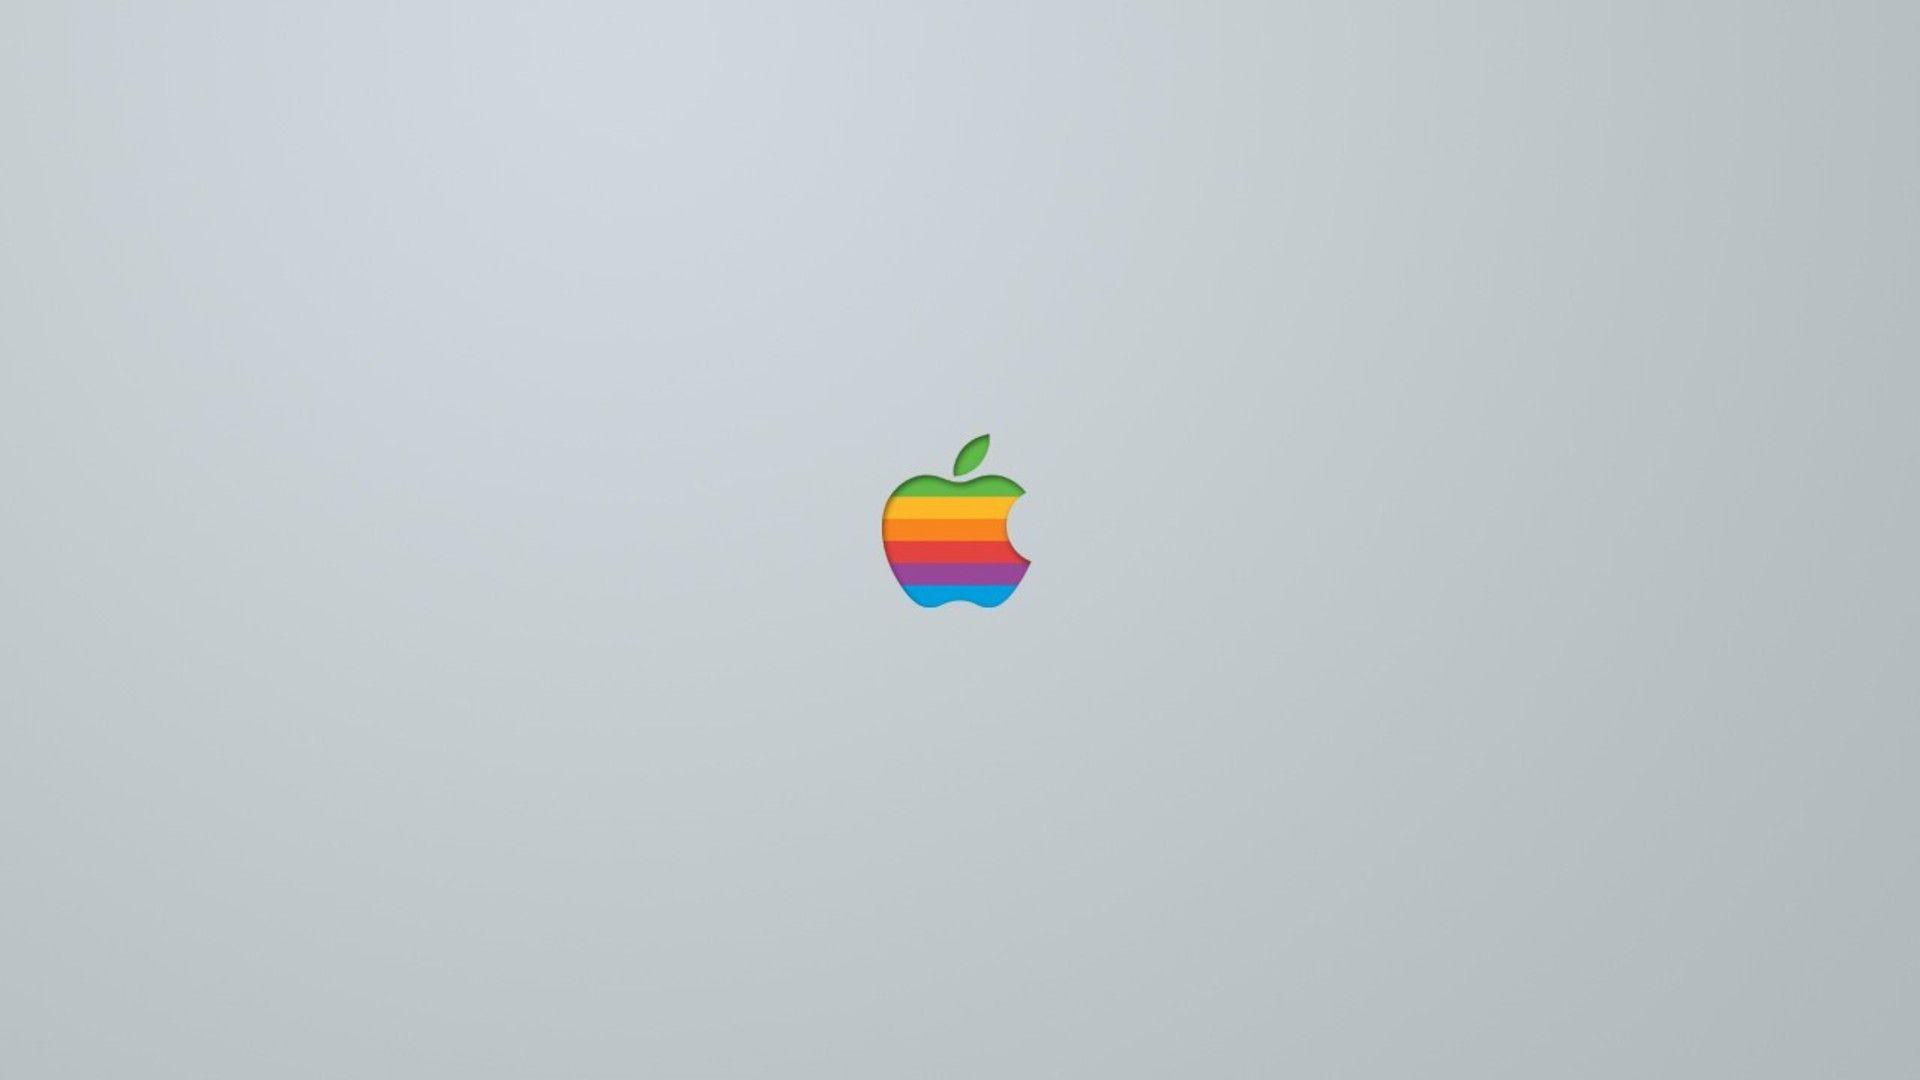 Mac os x apples wallpaper. PC